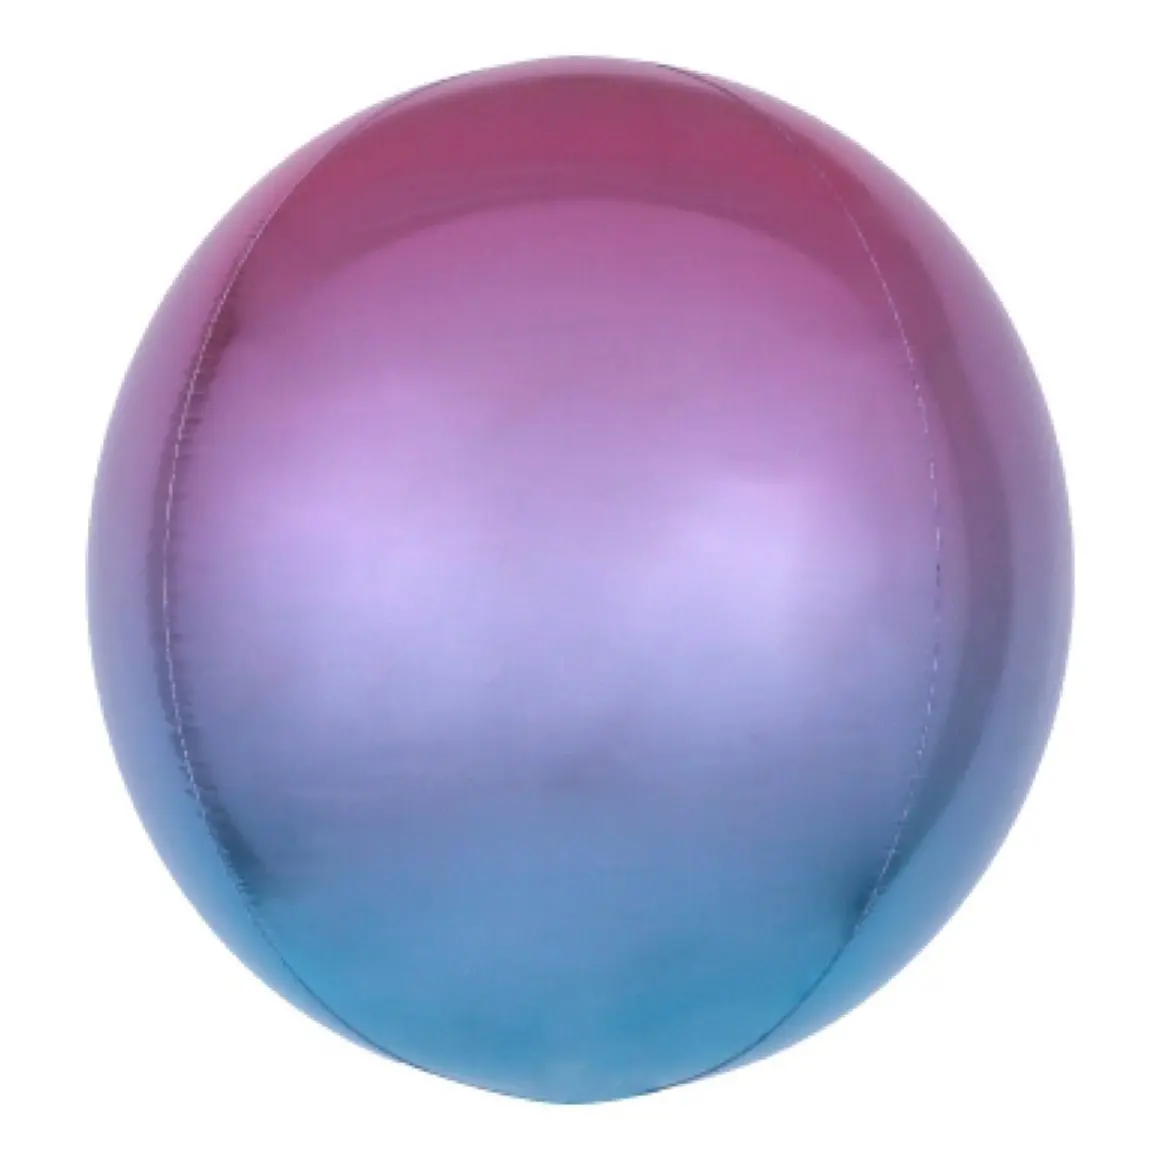 ORBZ sphere balloon - Violet Blue